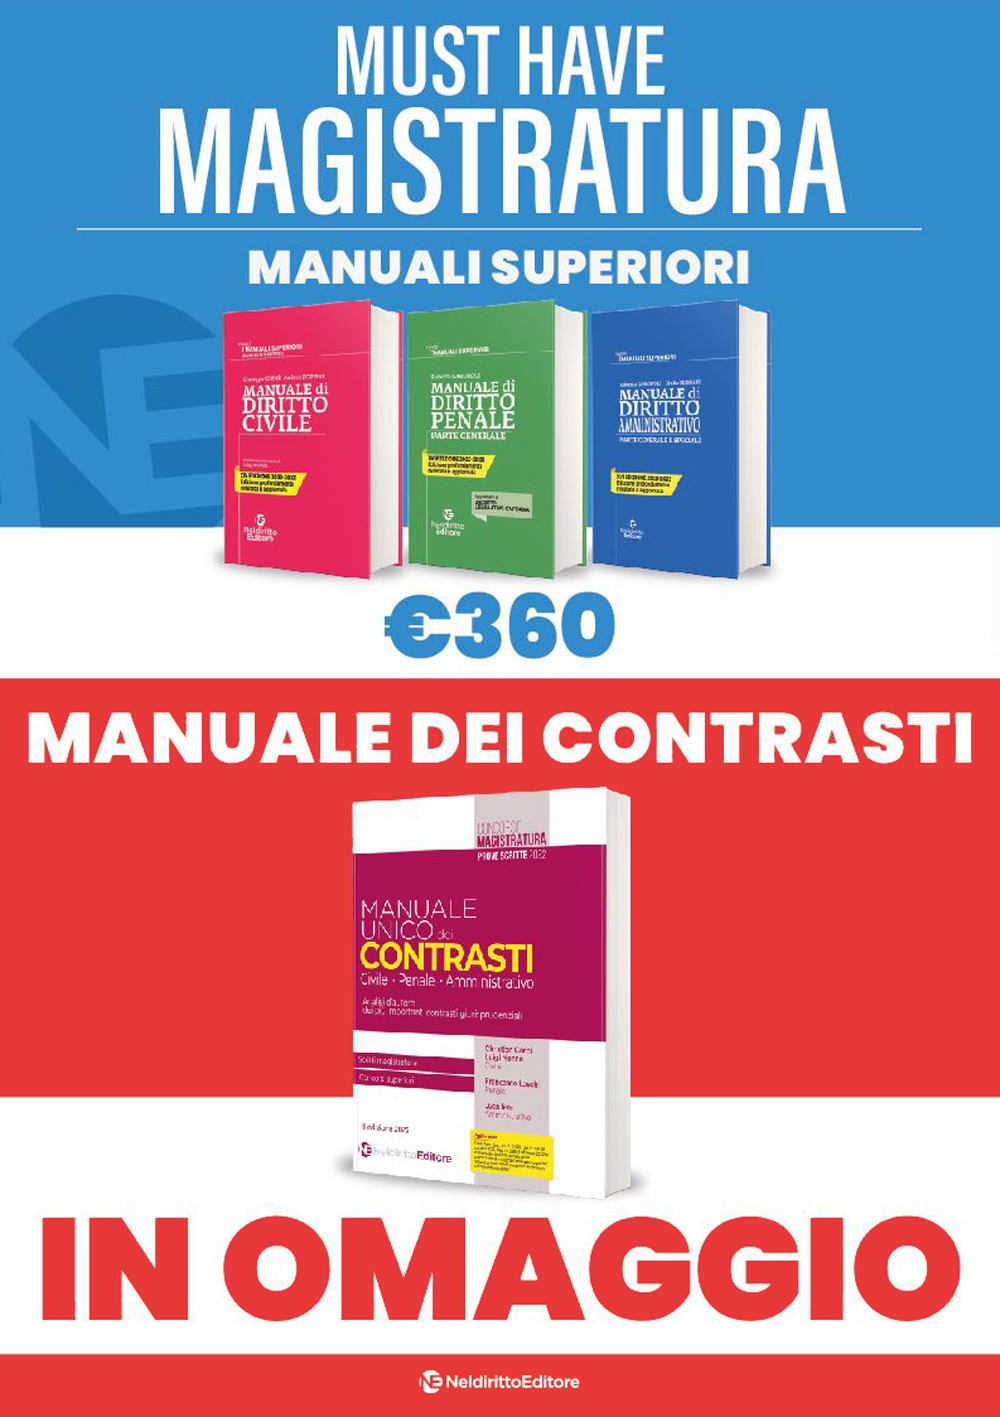 Must have amgistratura: Kit 3 Manuali superiori-Manuale Unico dei Contrasti